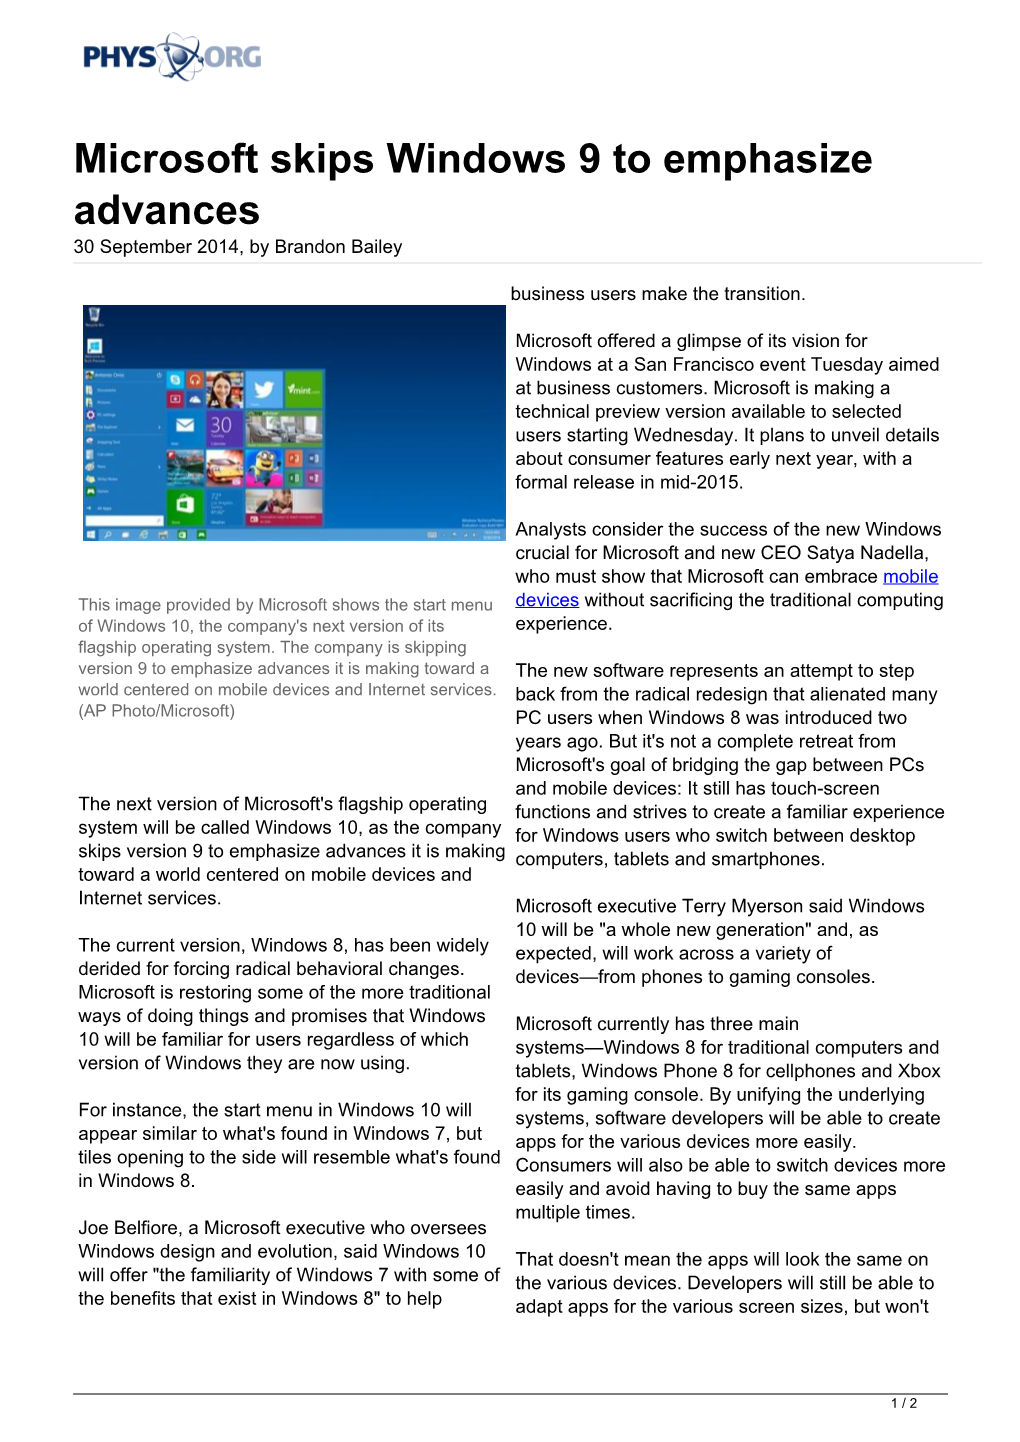 Microsoft Skips Windows 9 to Emphasize Advances 30 September 2014, by Brandon Bailey